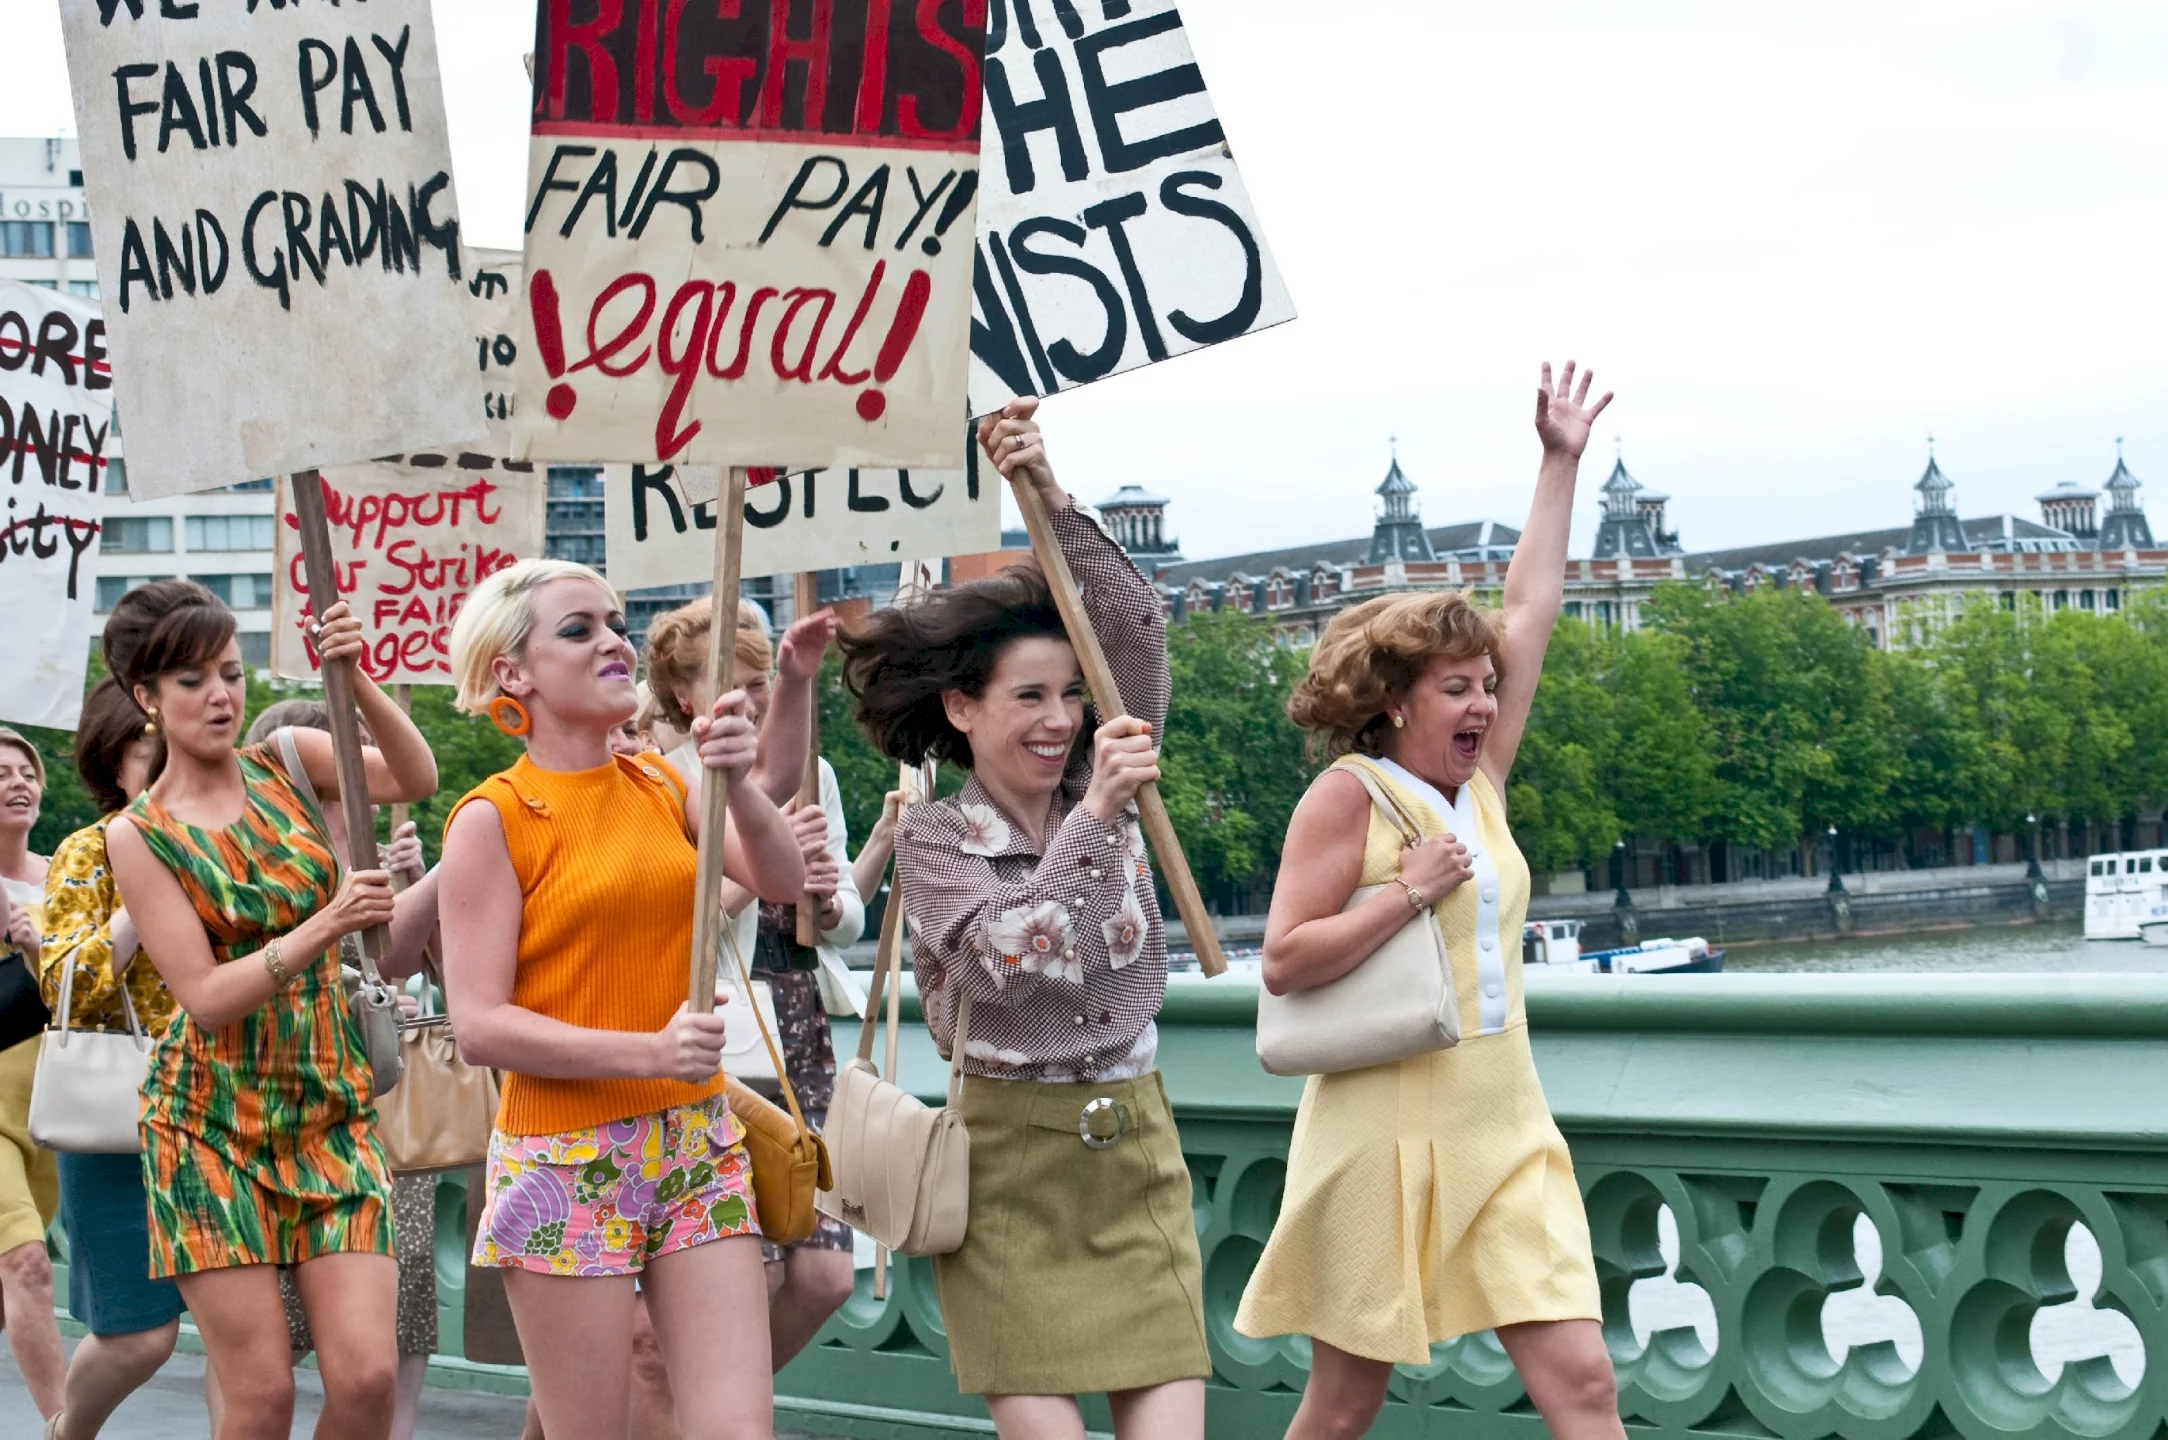 Photo du film : We want sex equality !